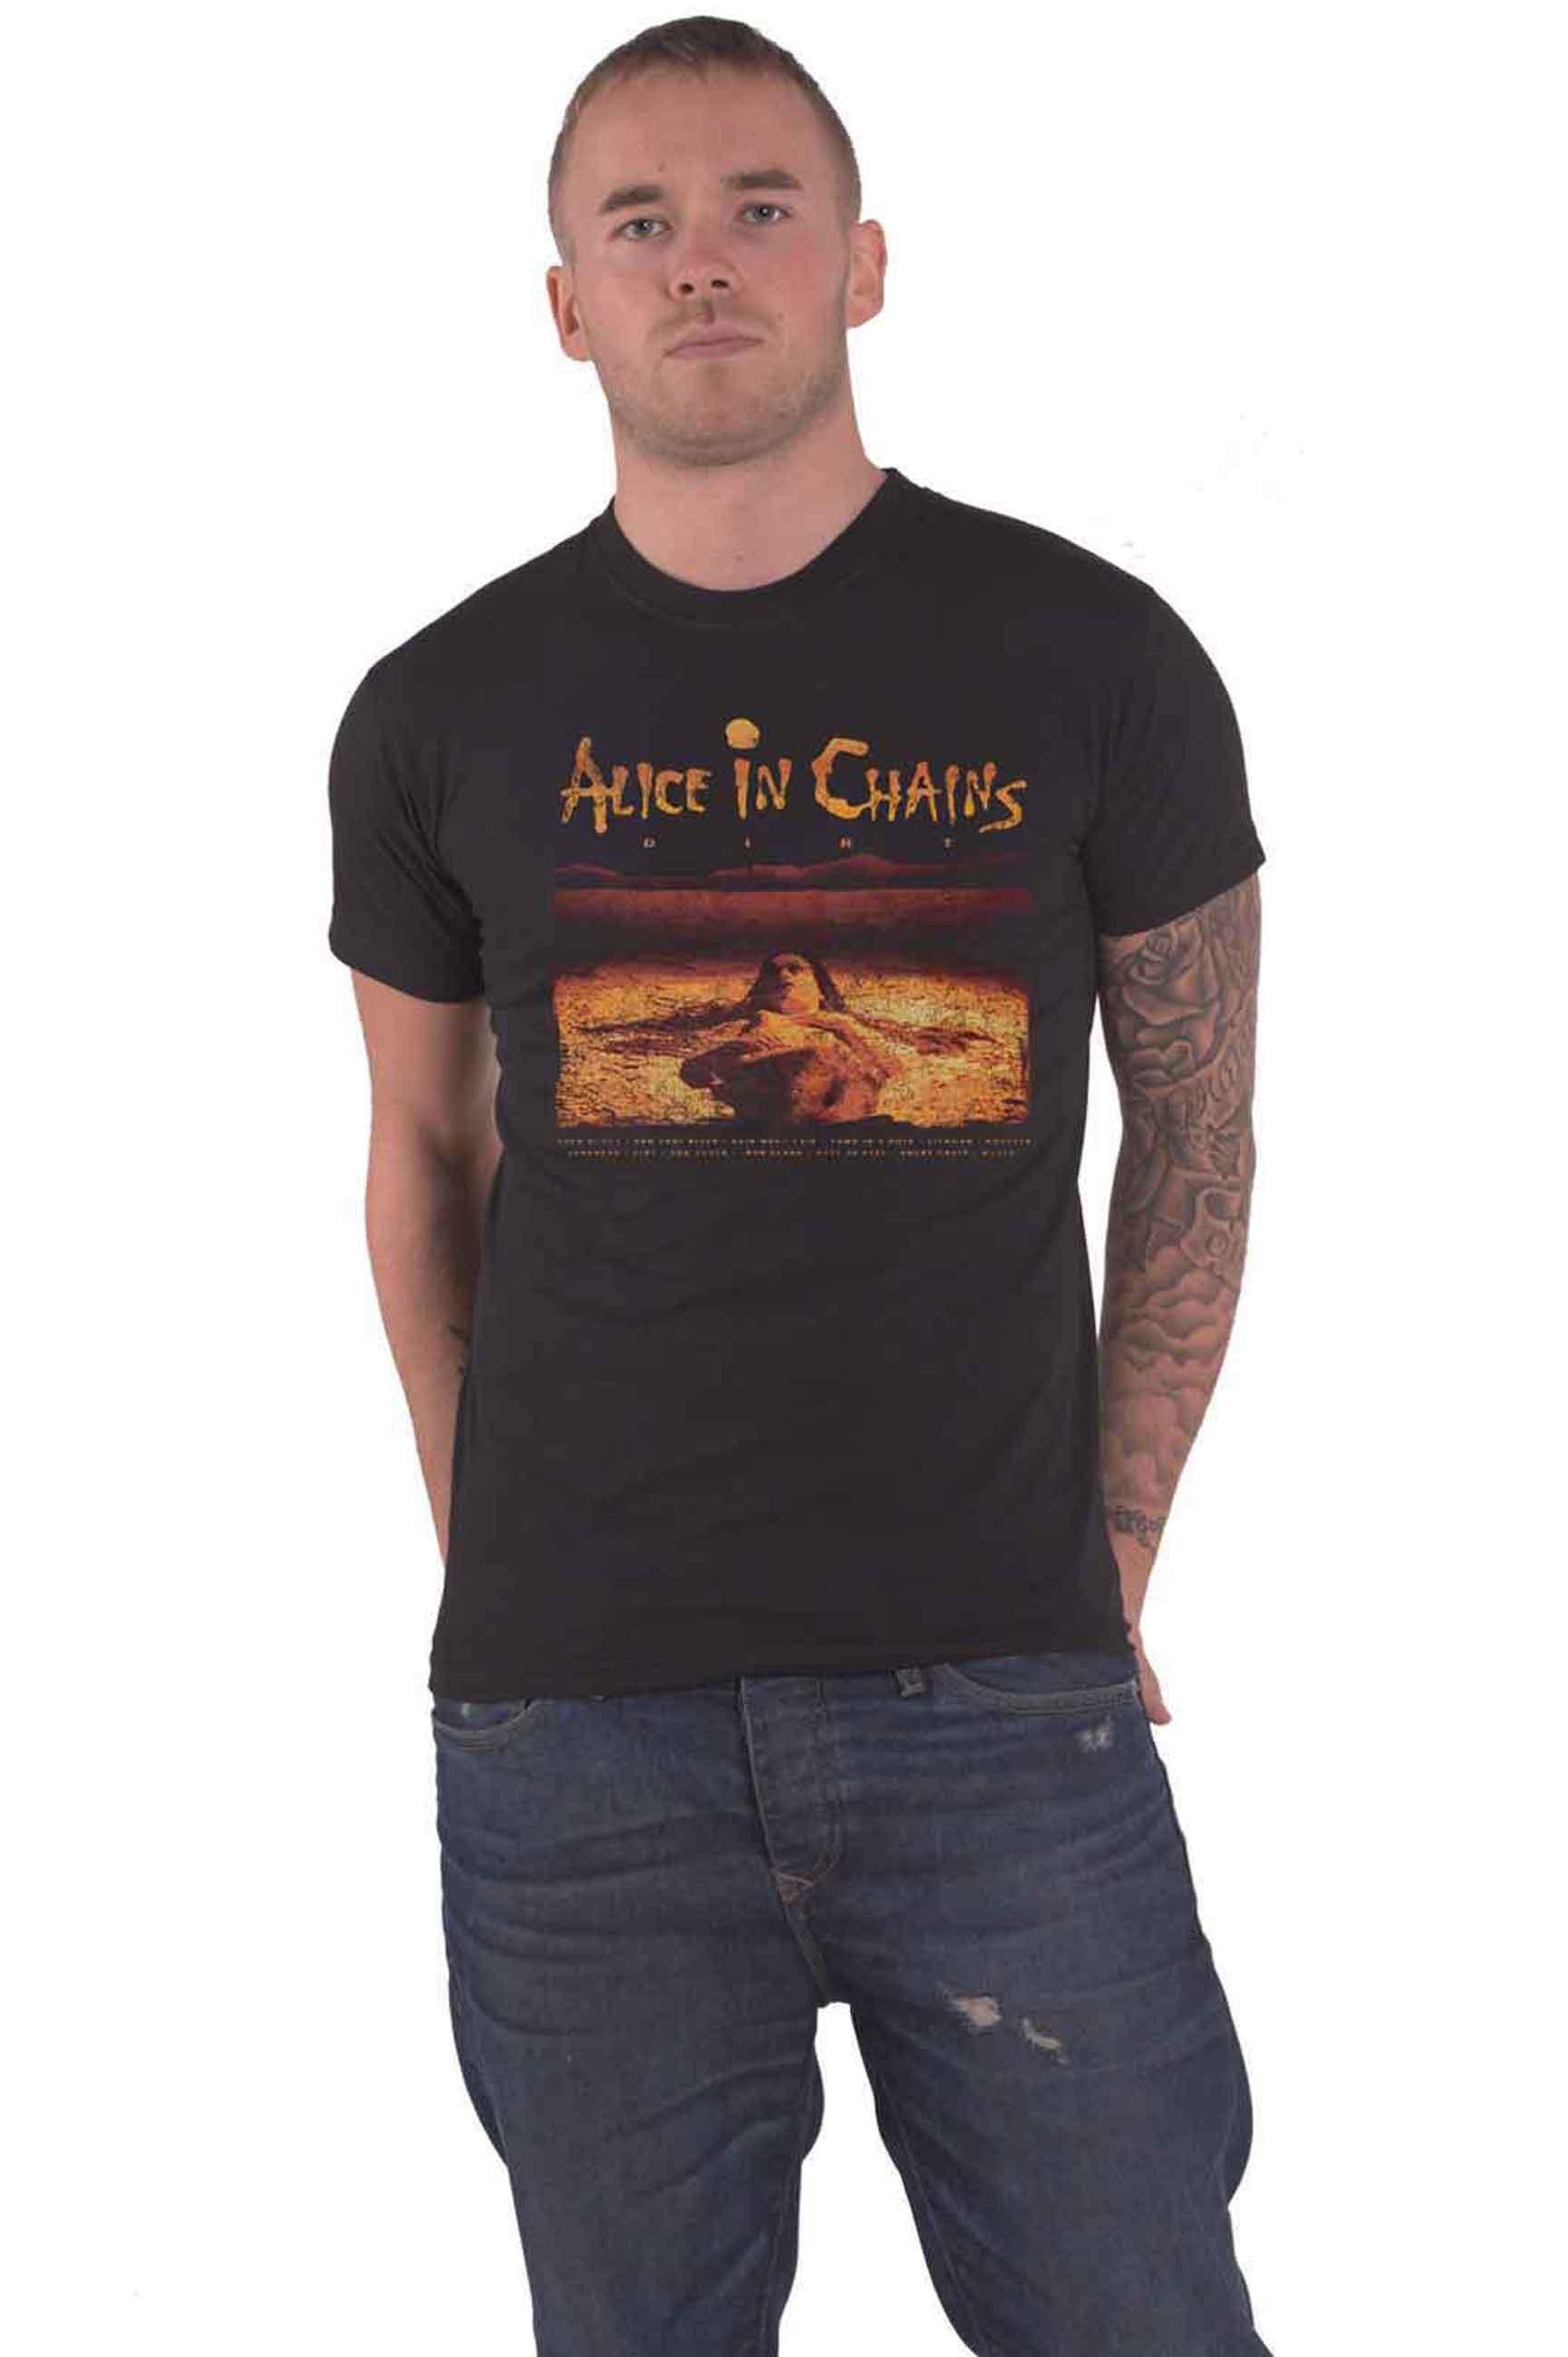 Футболка с треклистом Dirt Alice In Chains, черный audio cd alice in chains dirt cd